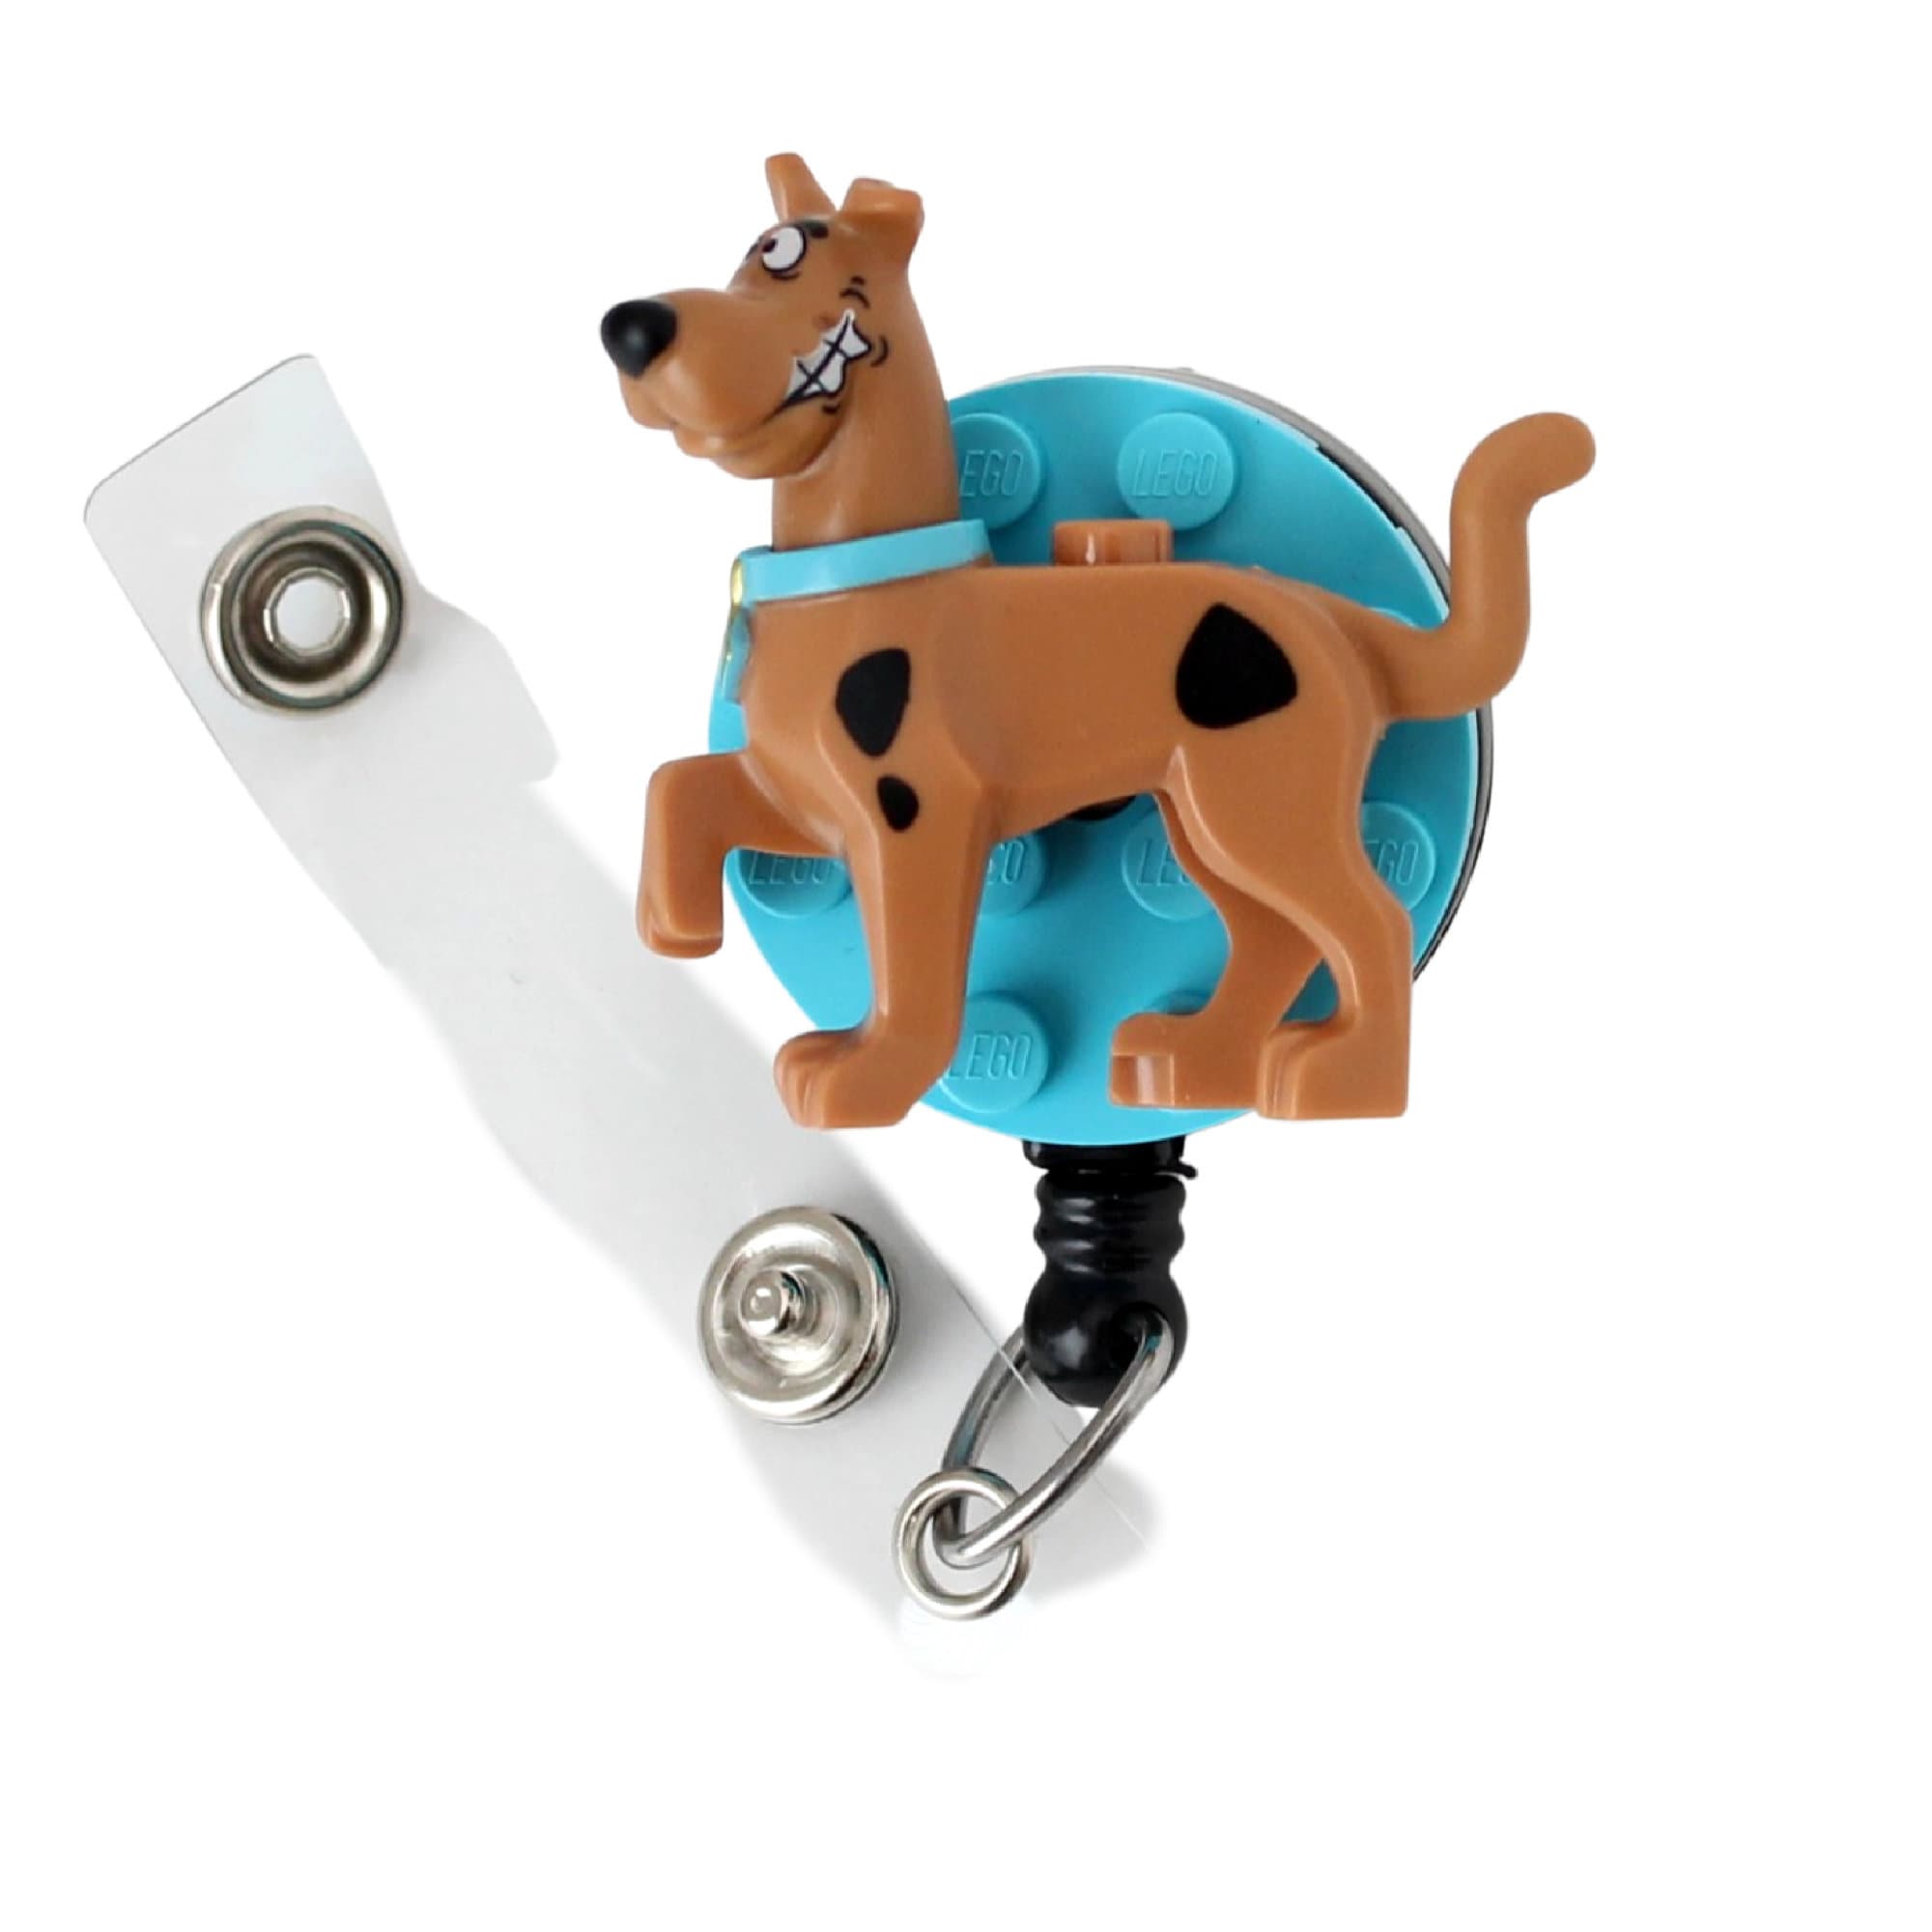 Scooby-Doo Character Lanyard Retractable Reel Badge ID Card Holder